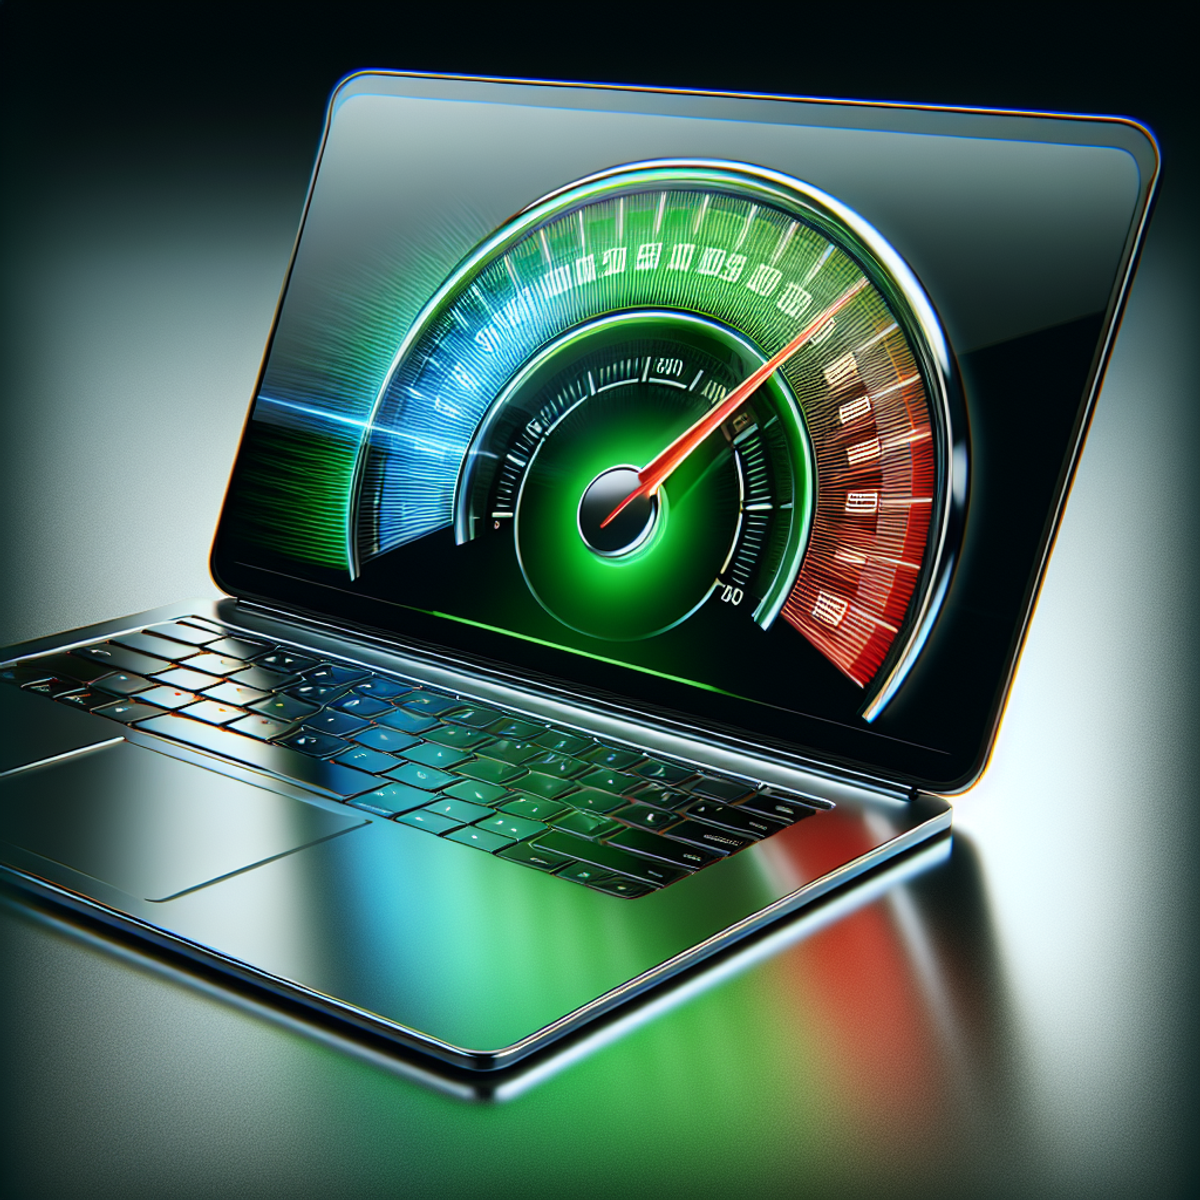 Sleek, metallic laptop with vibrant speedometer display.